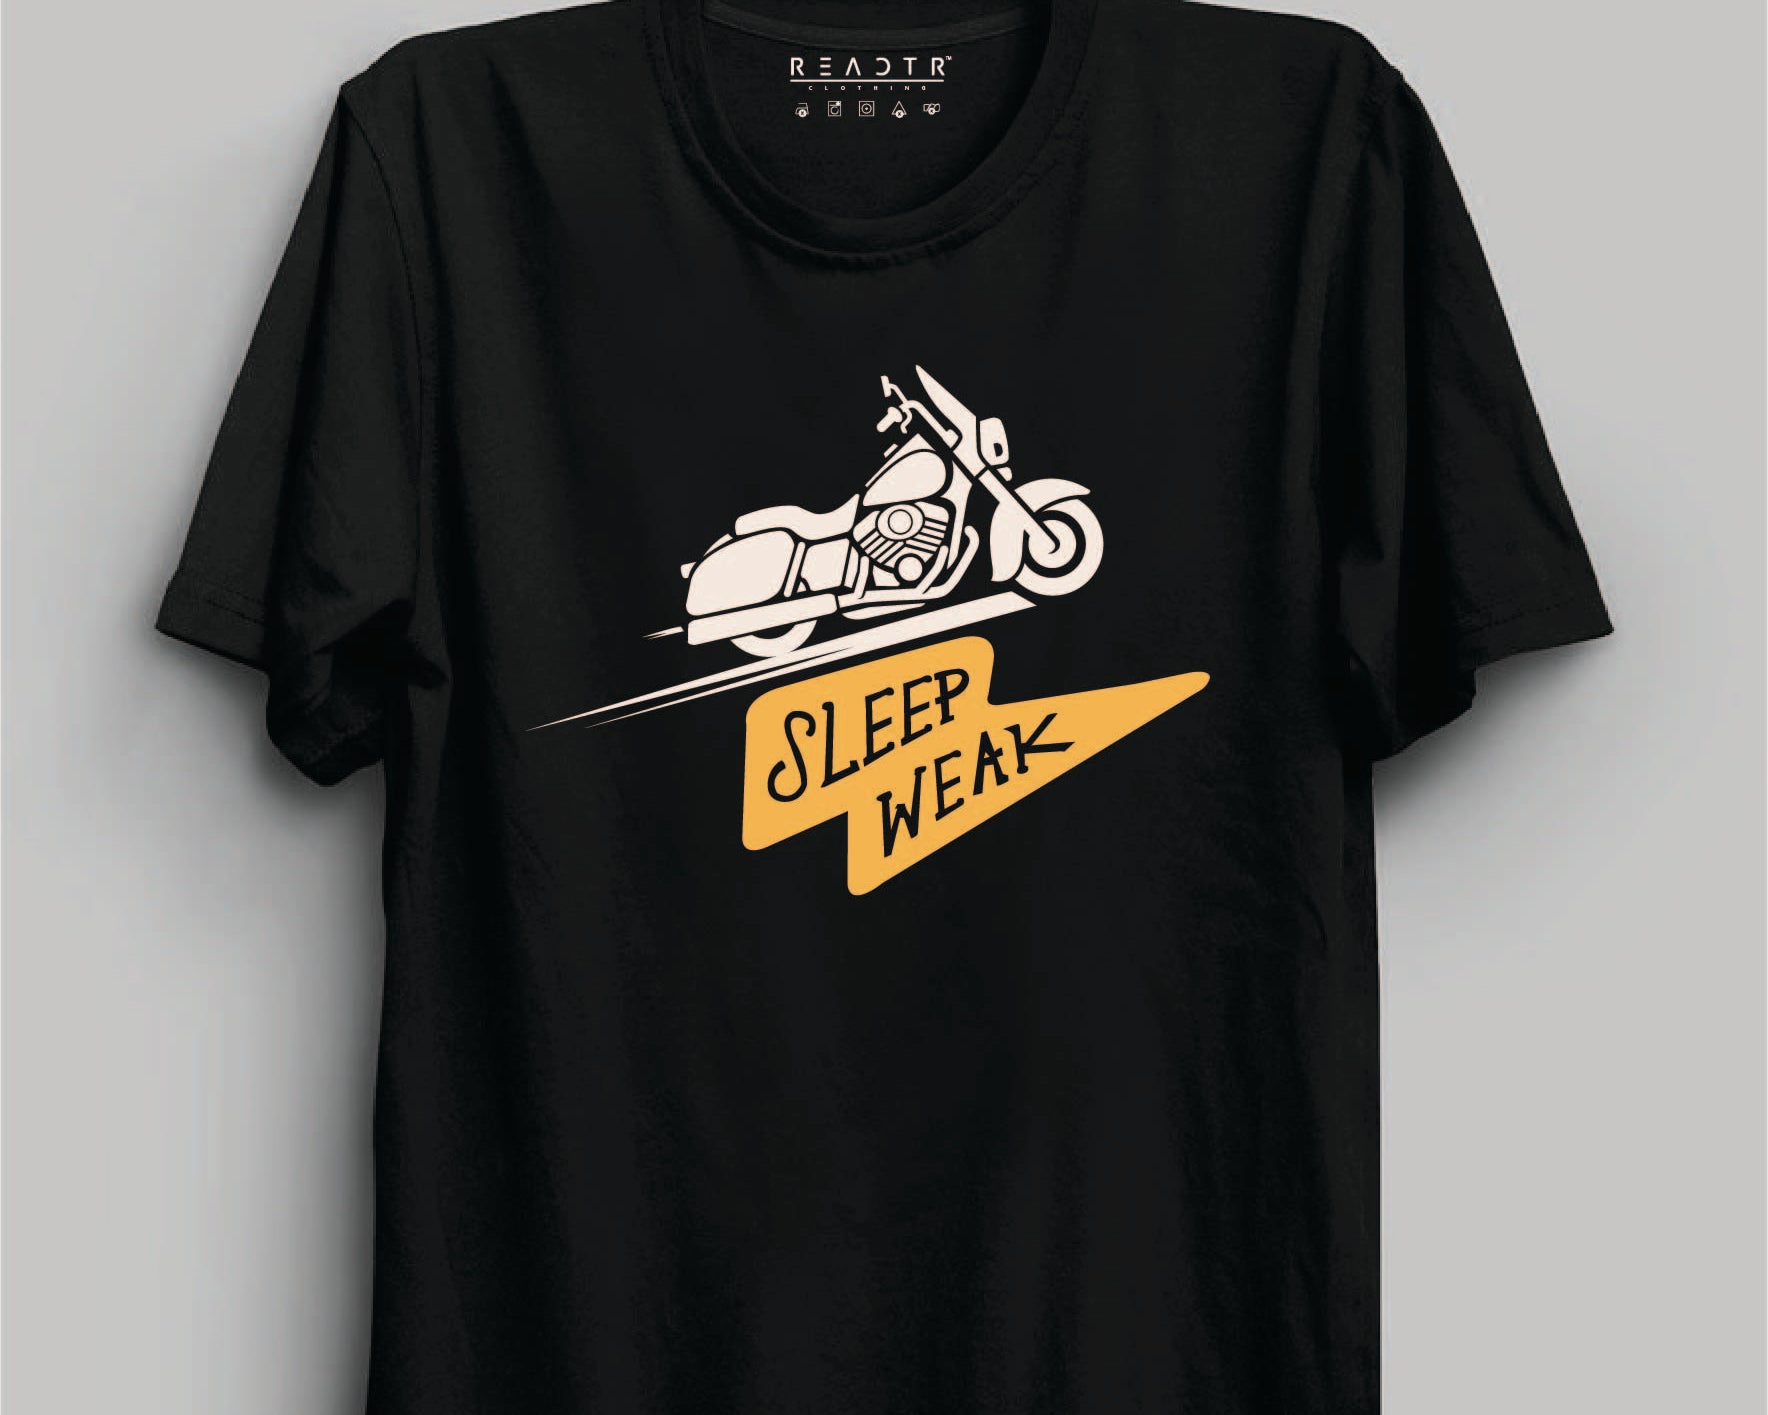 Sleep is For The Weak Reactr Tshirts For Men - Eyewearlabs